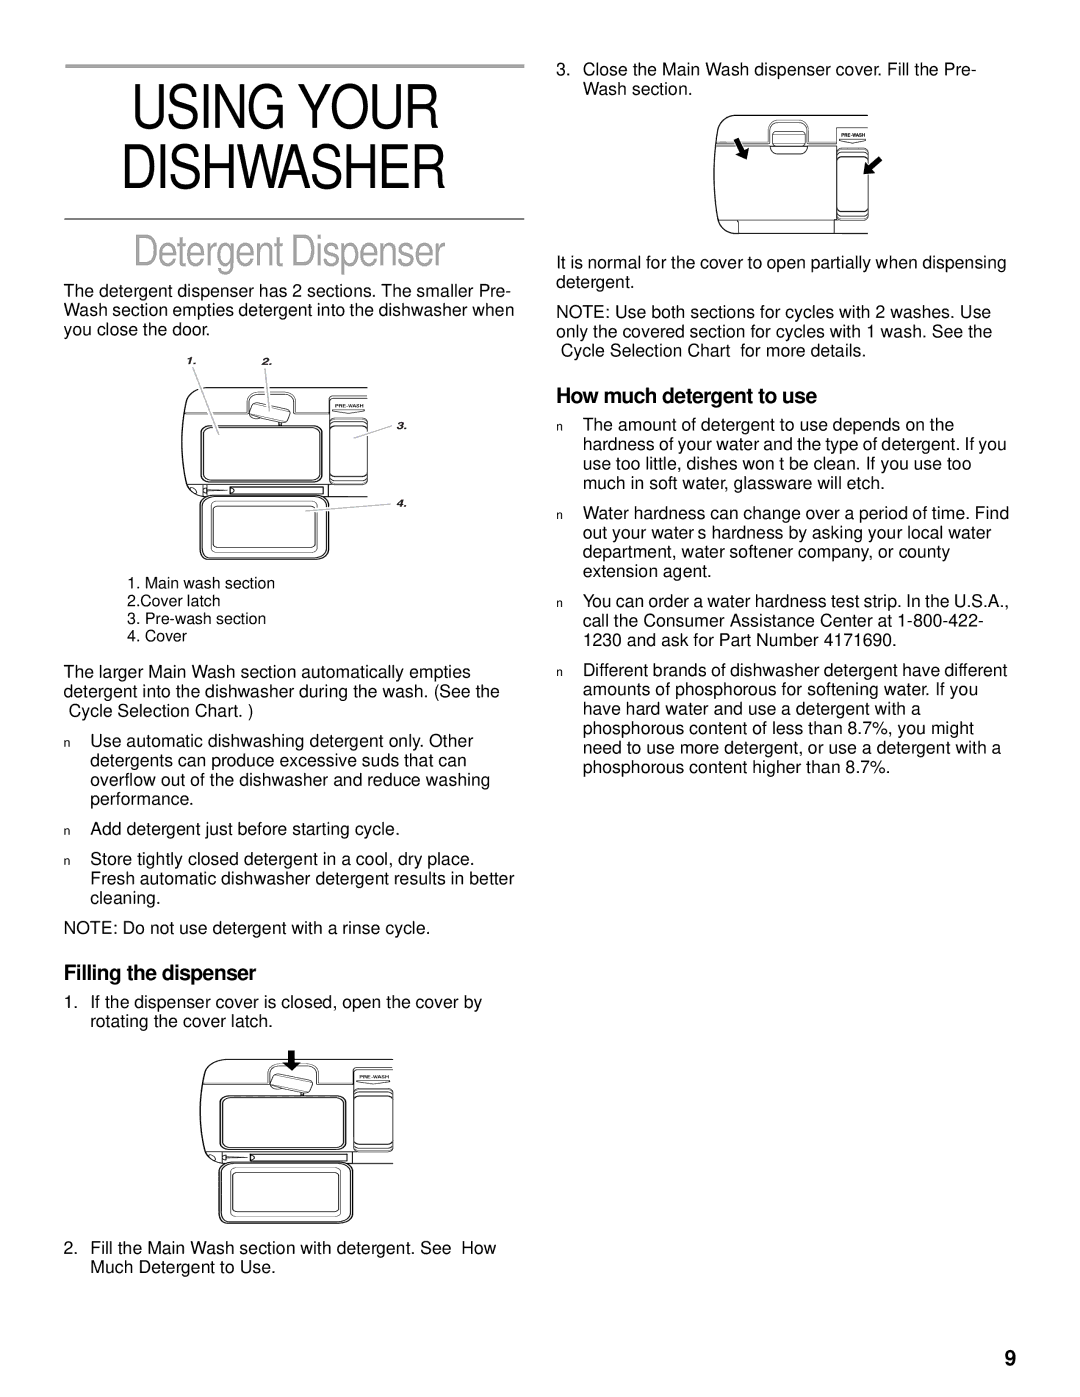 KitchenAid KUDR25SH manual Detergent Dispenser, Filling the dispenser, How much detergent to use 